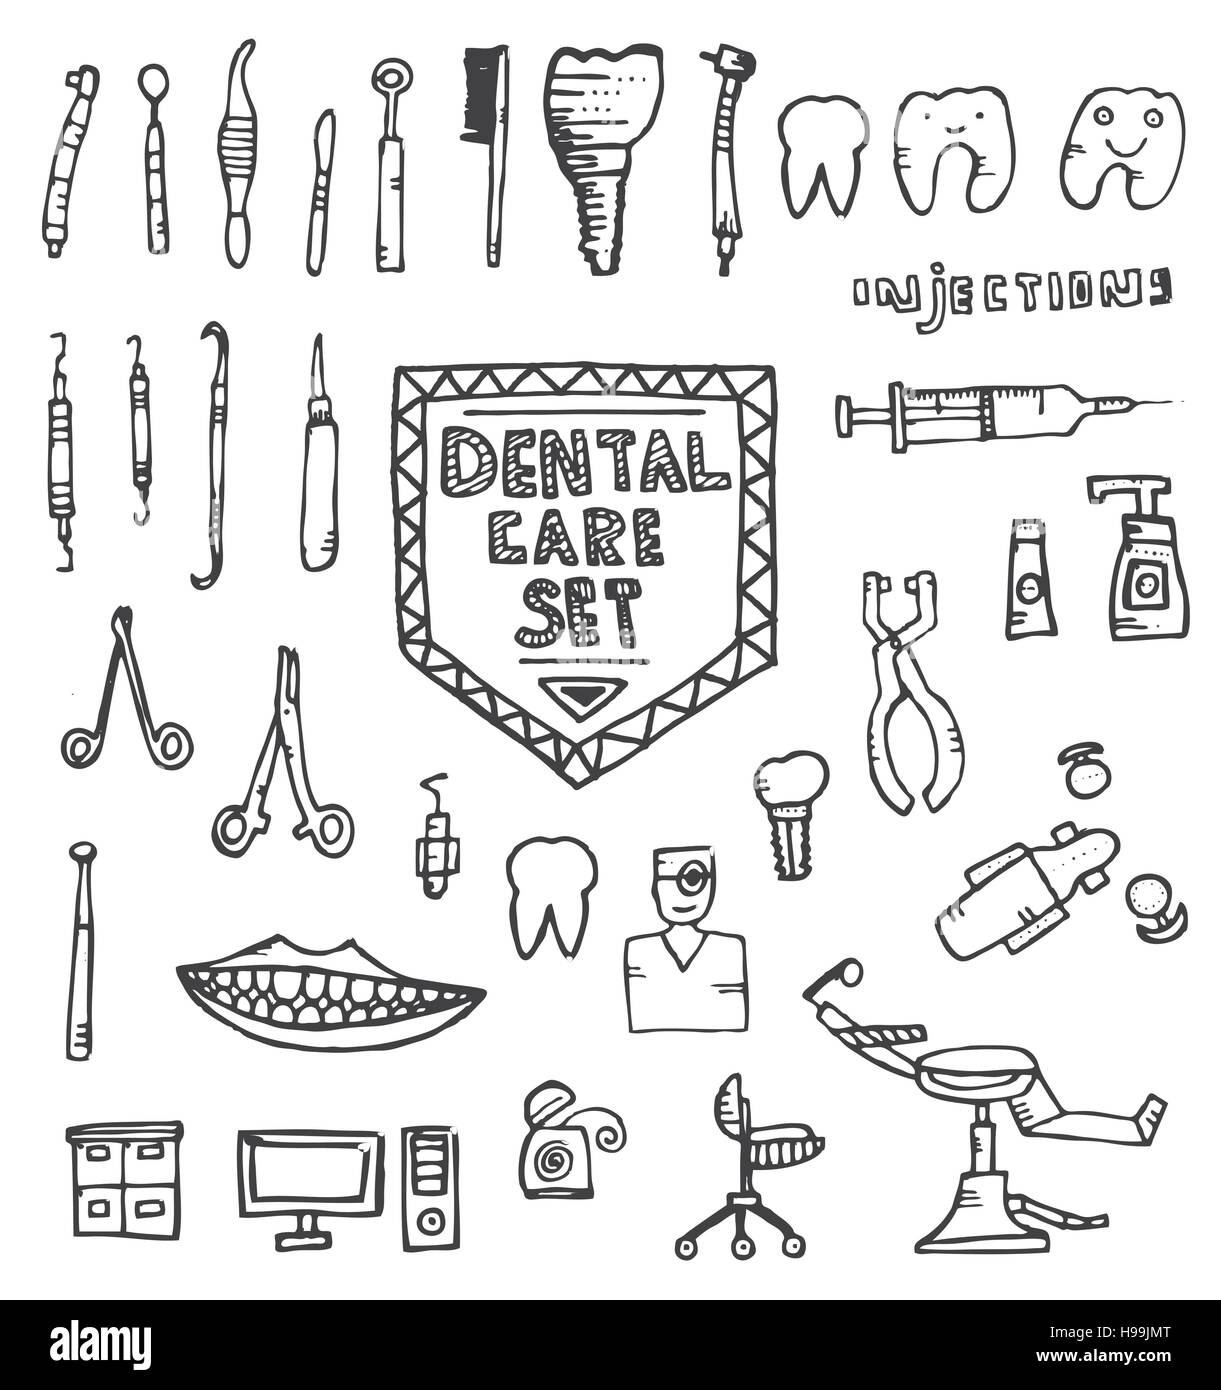 Zahnpflege Set mit verschiedenen handgezeichnete Icons Isolated on White Background. Vektor-Illustration. Stock Vektor